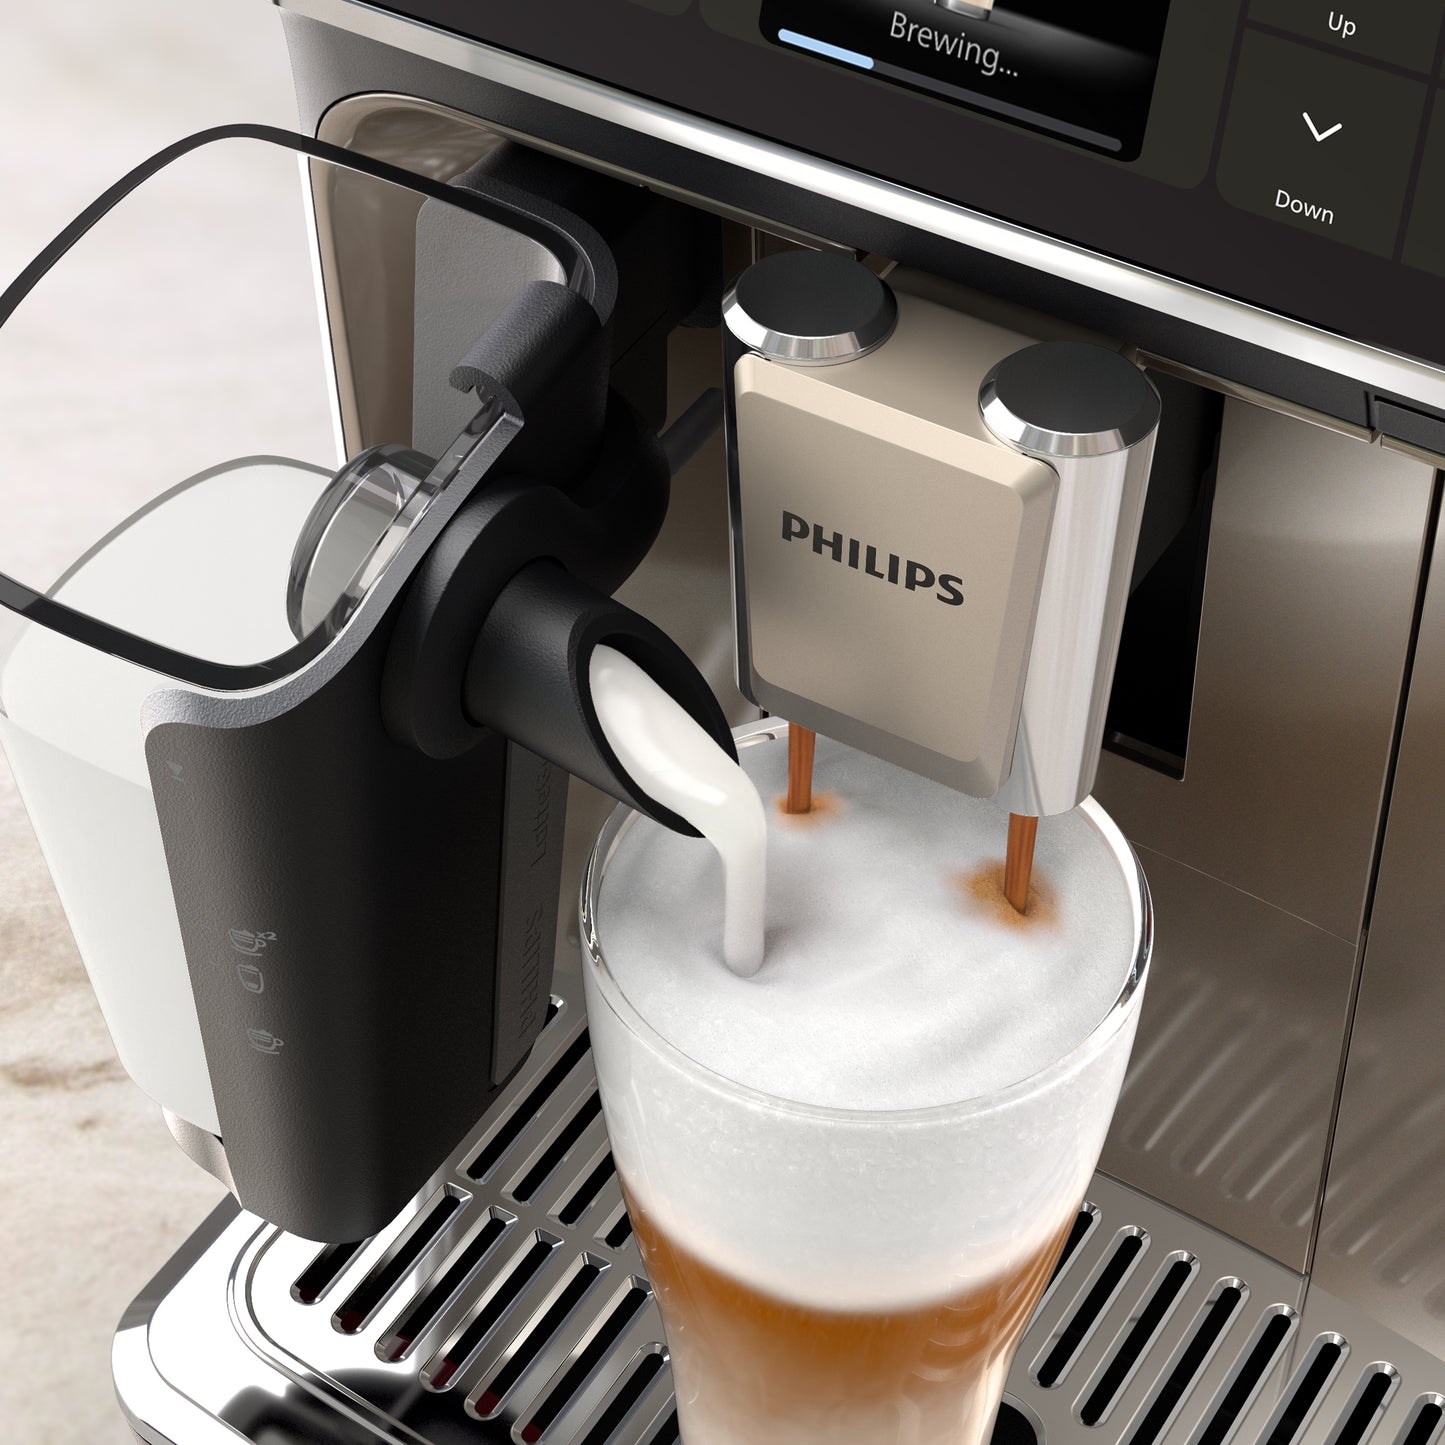 Philips 5500 Series Fully Automatic Espresso Machine- LatteGo (EP5544/90)